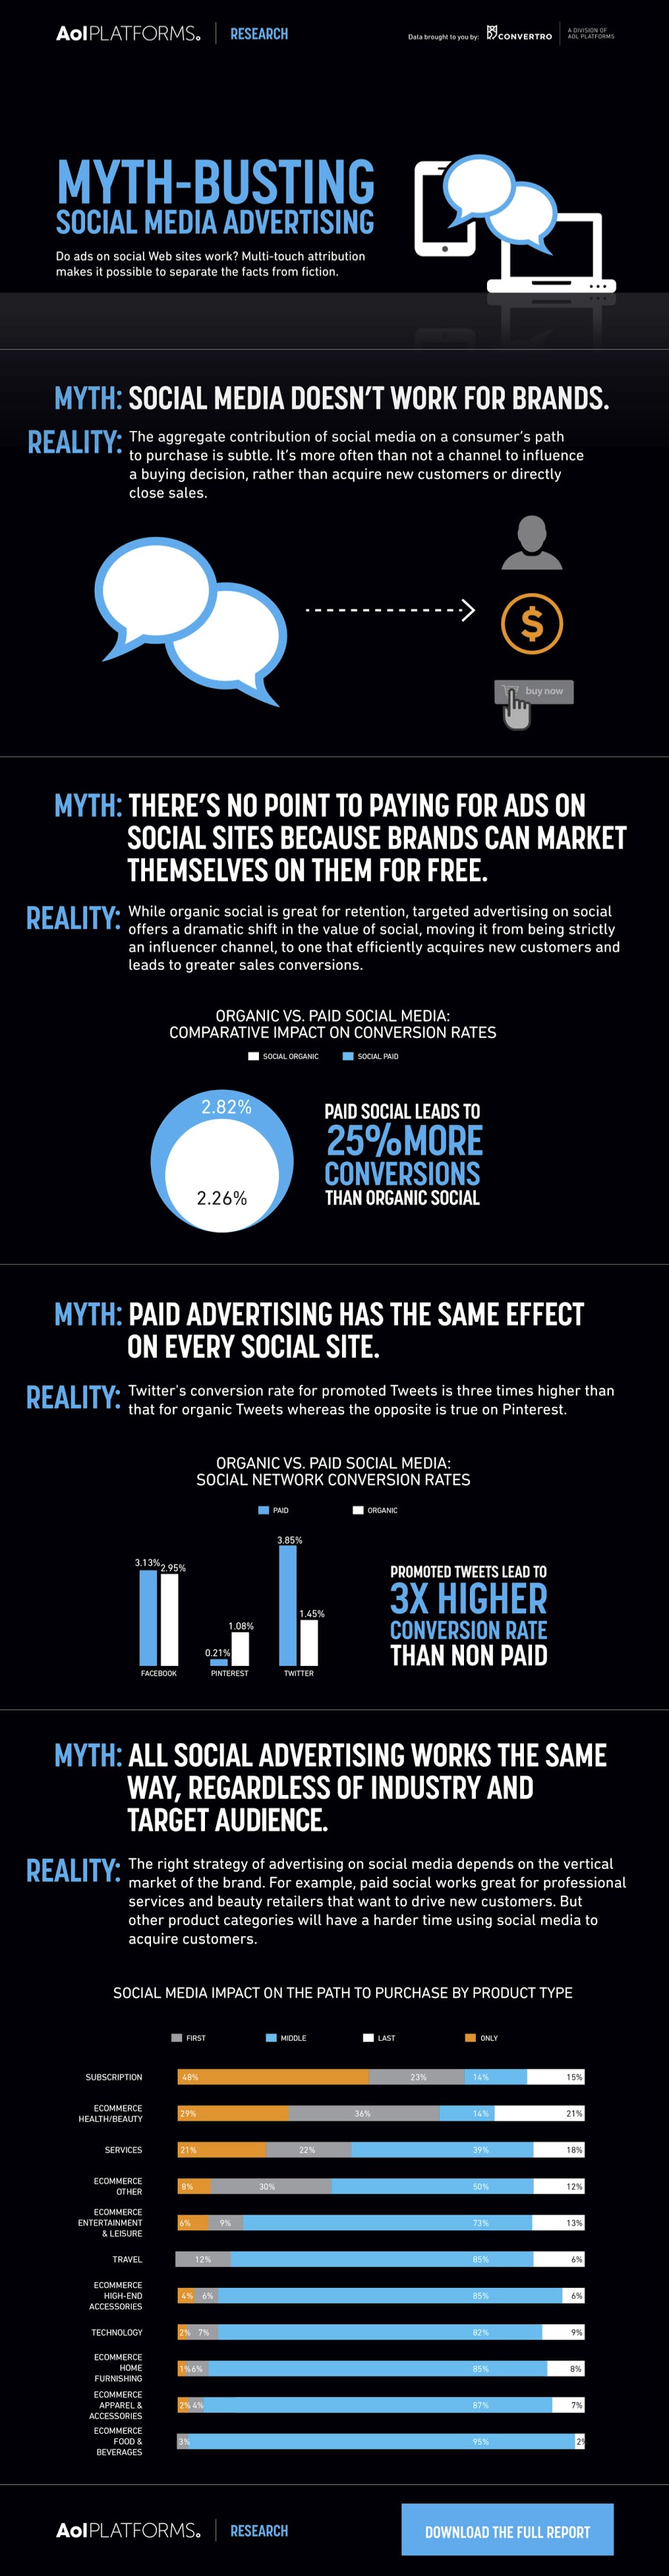 social media ads myth busting